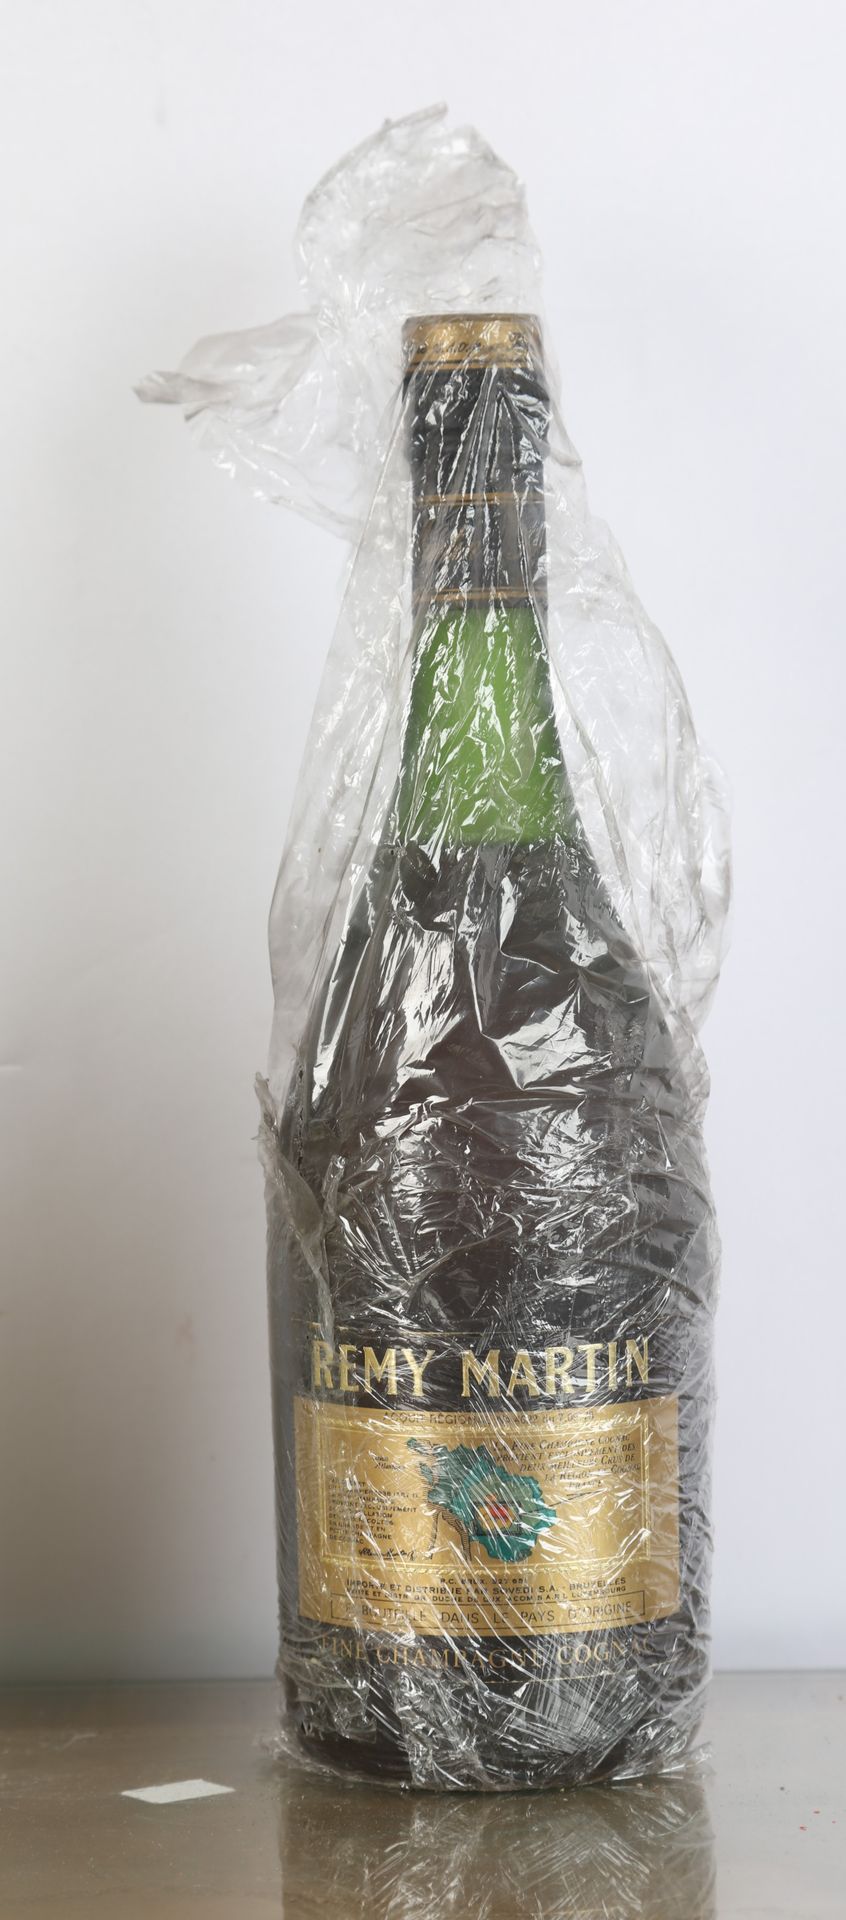 Null Cognac, Rémy Martin, (rif. 2) e - 1 bottiglia di Dry Gin Gordons, (rif. 2)